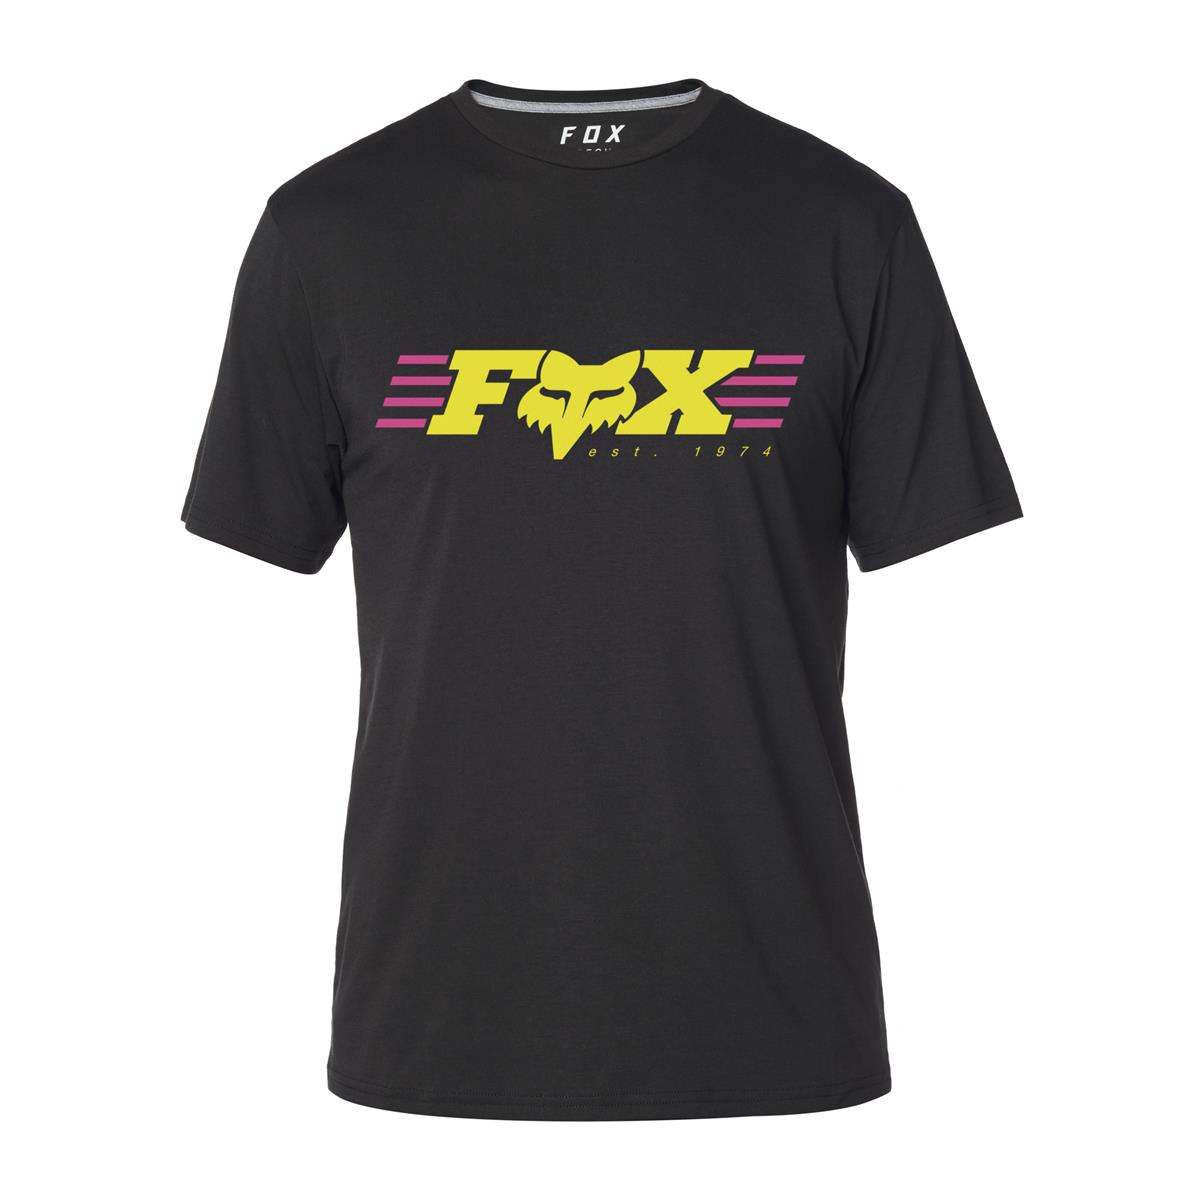 Fox T-Shirt Muffler Limited Edition A1 - Schwarz/Gelb